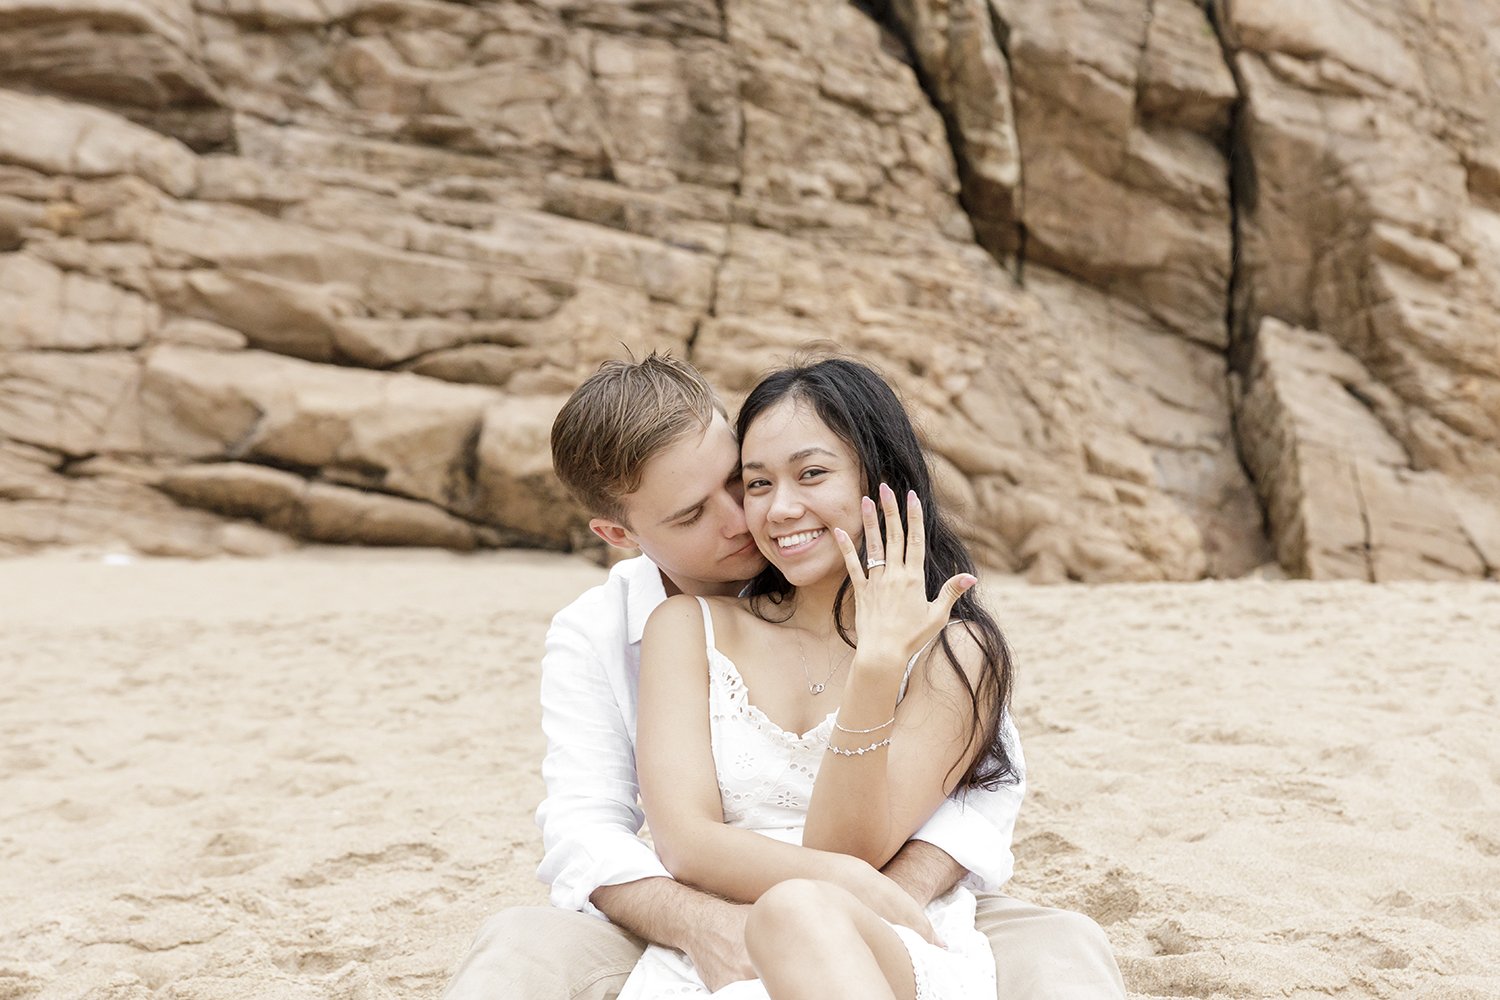 surprise-wedding-proposal-photographer-praia-da-ursa--sintra-terra-fotografia-flytographer-024.jpg